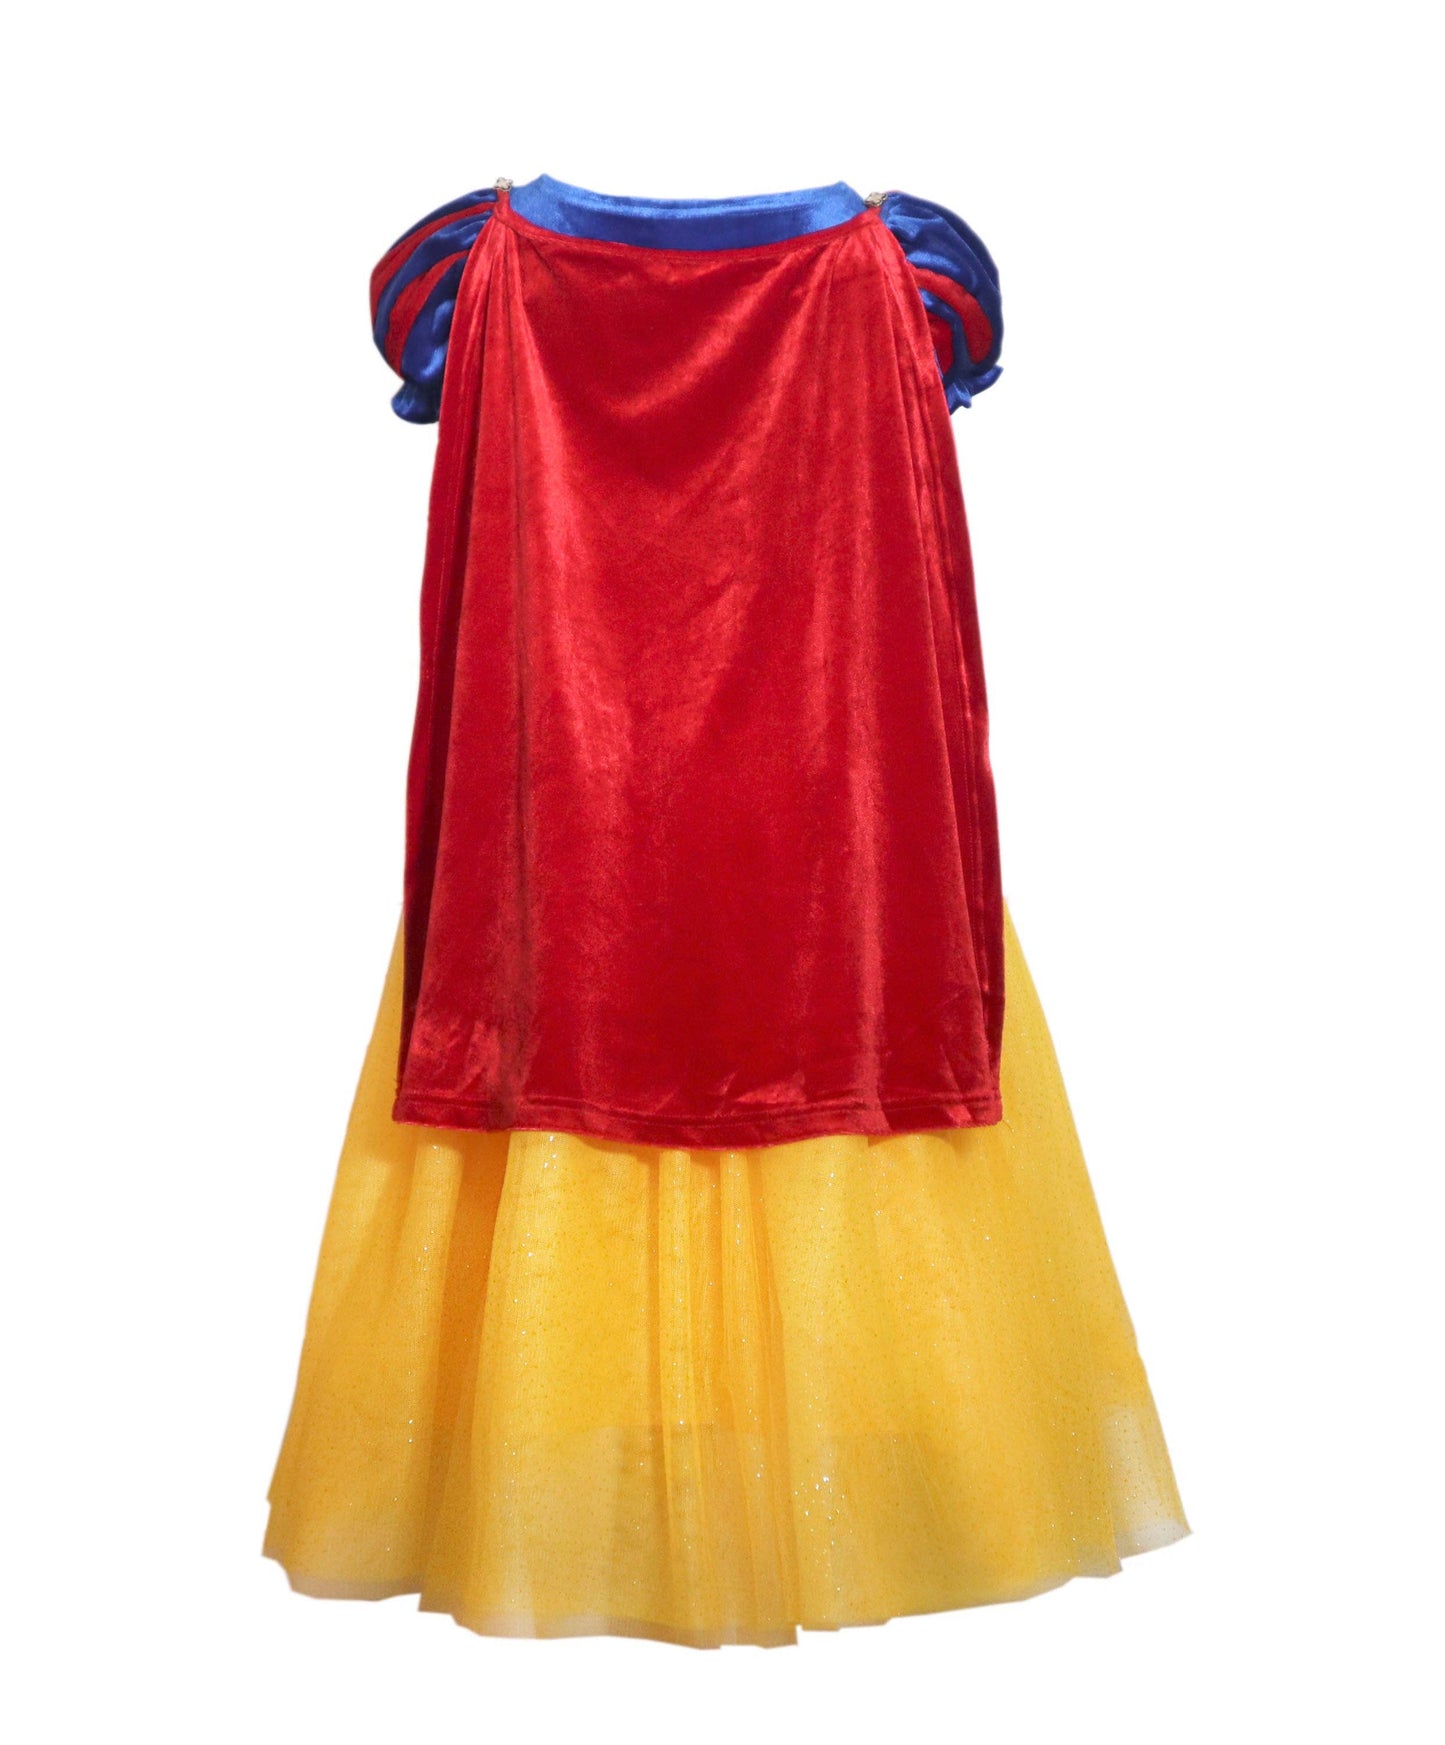 Fairest Princess Costume Dress (XS) 2-3 years